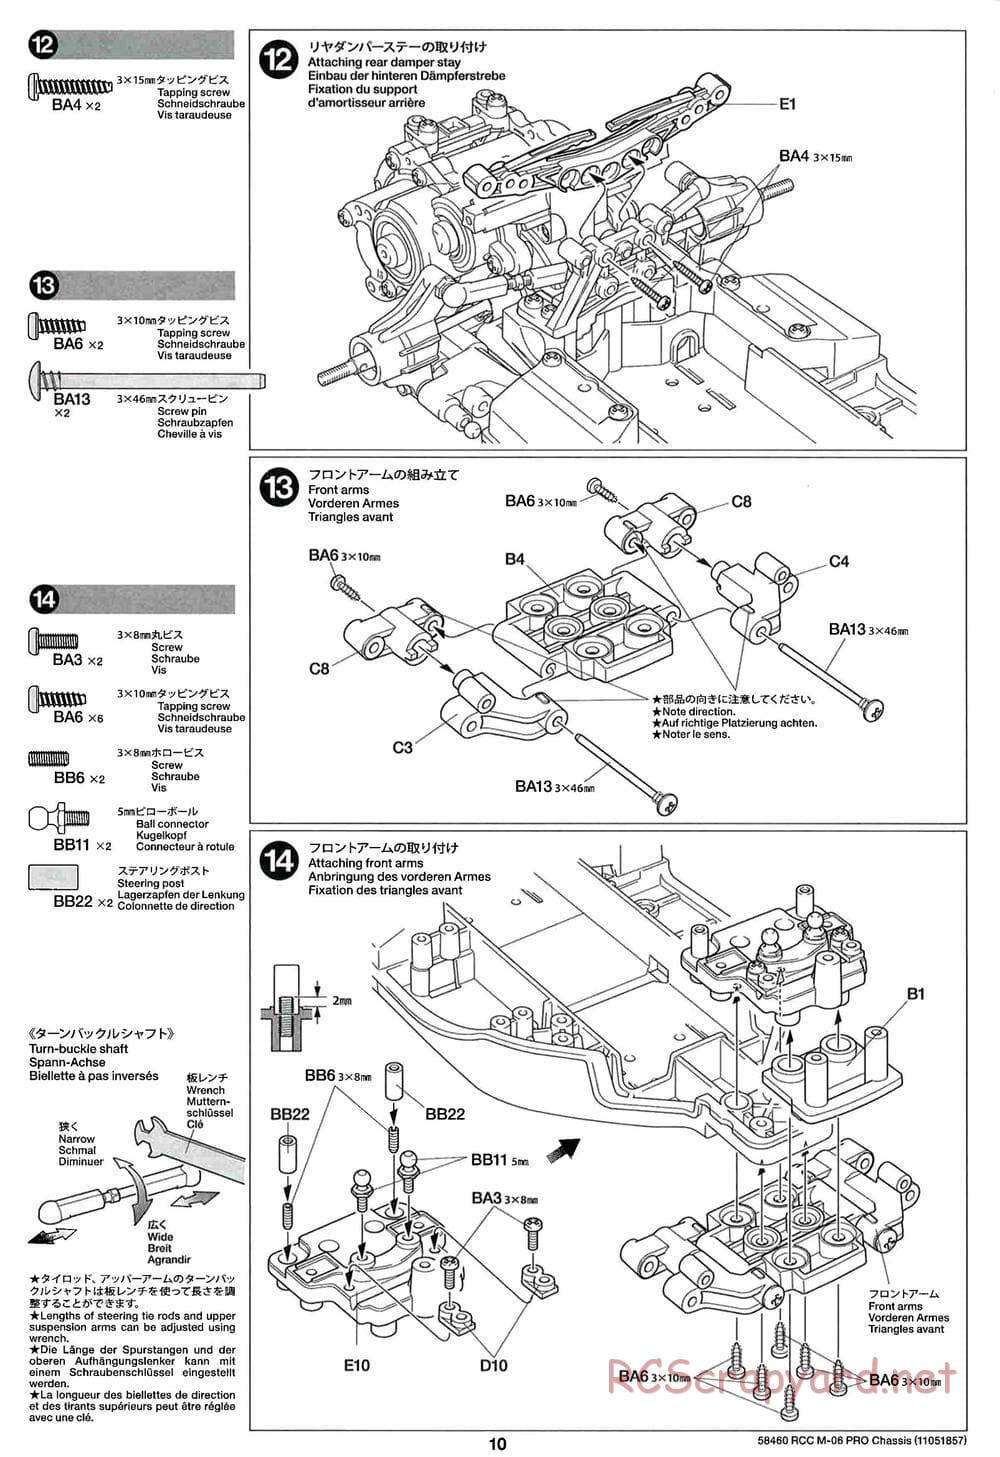 Tamiya - M-06 Pro Chassis - Manual - Page 10